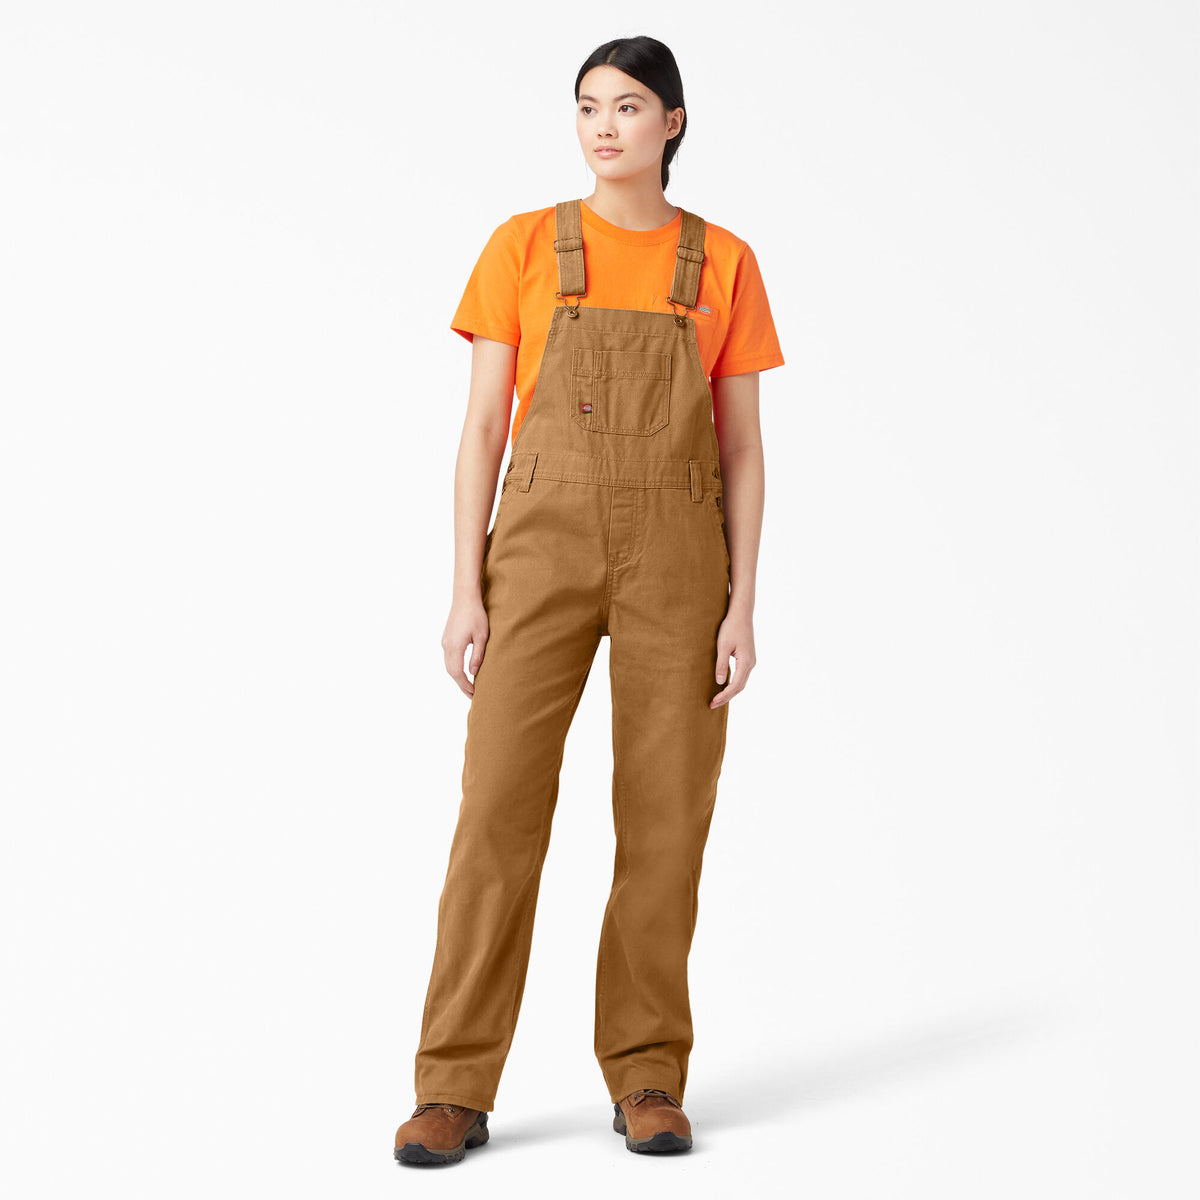 Dickies (W) Bib Overall - Work World - Workwear, Work Boots, Safety Gear